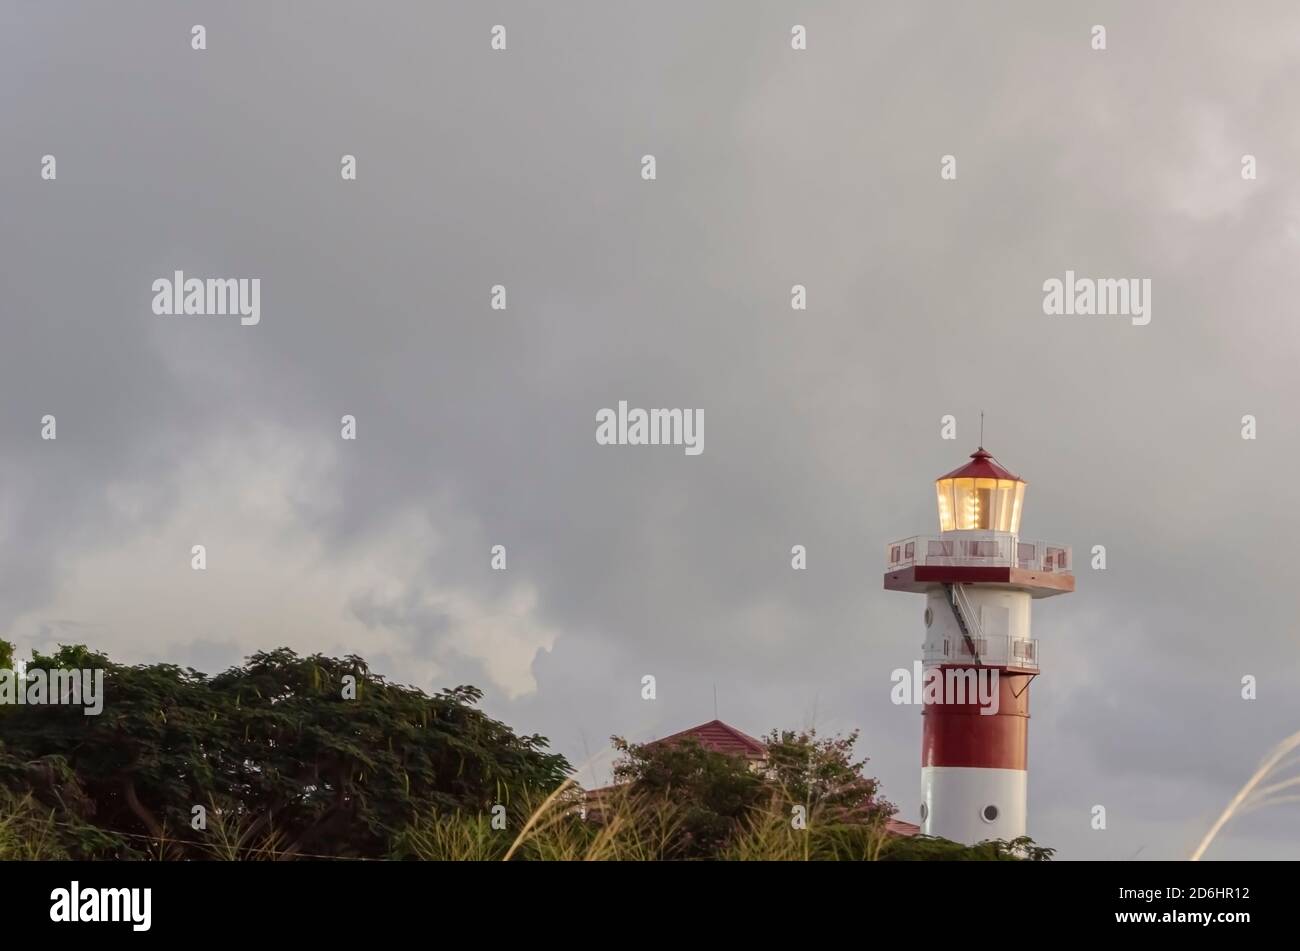 Lit Lighthouse Lamp Stock Photo